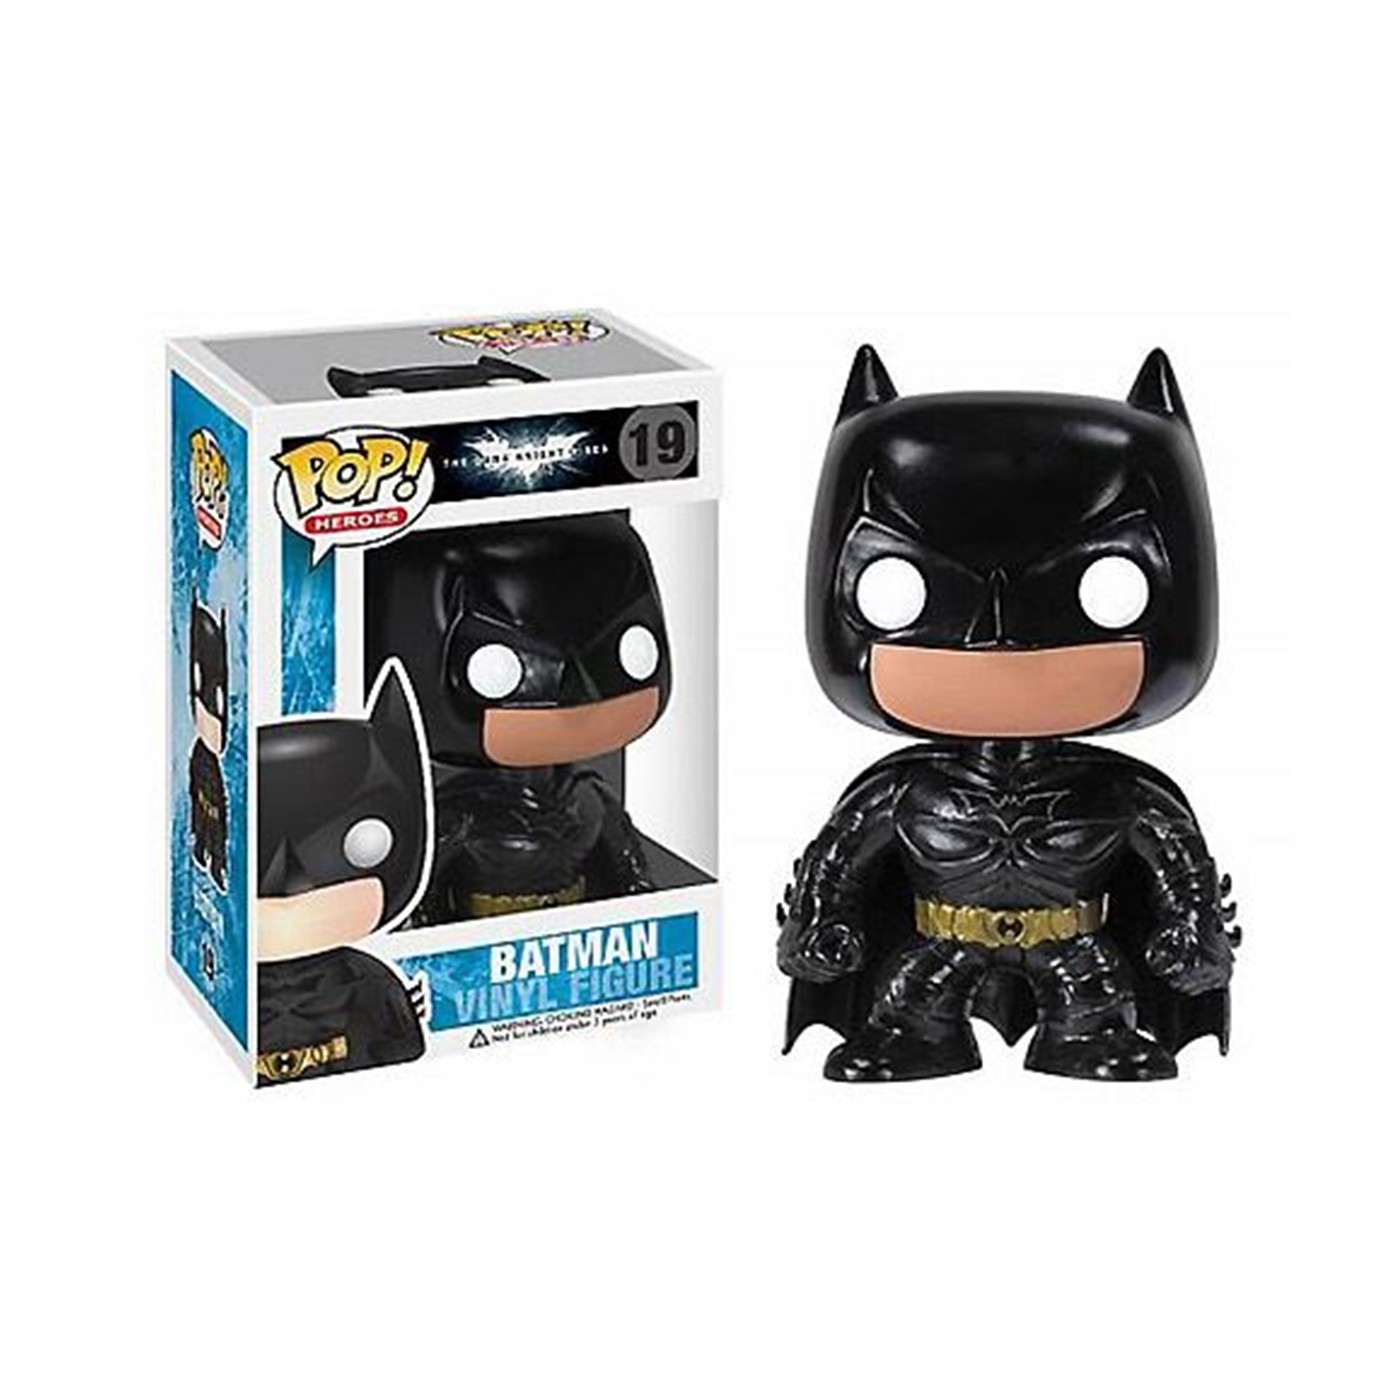 Batman Dark Knight Rises POP Heroes Vinyl Figure